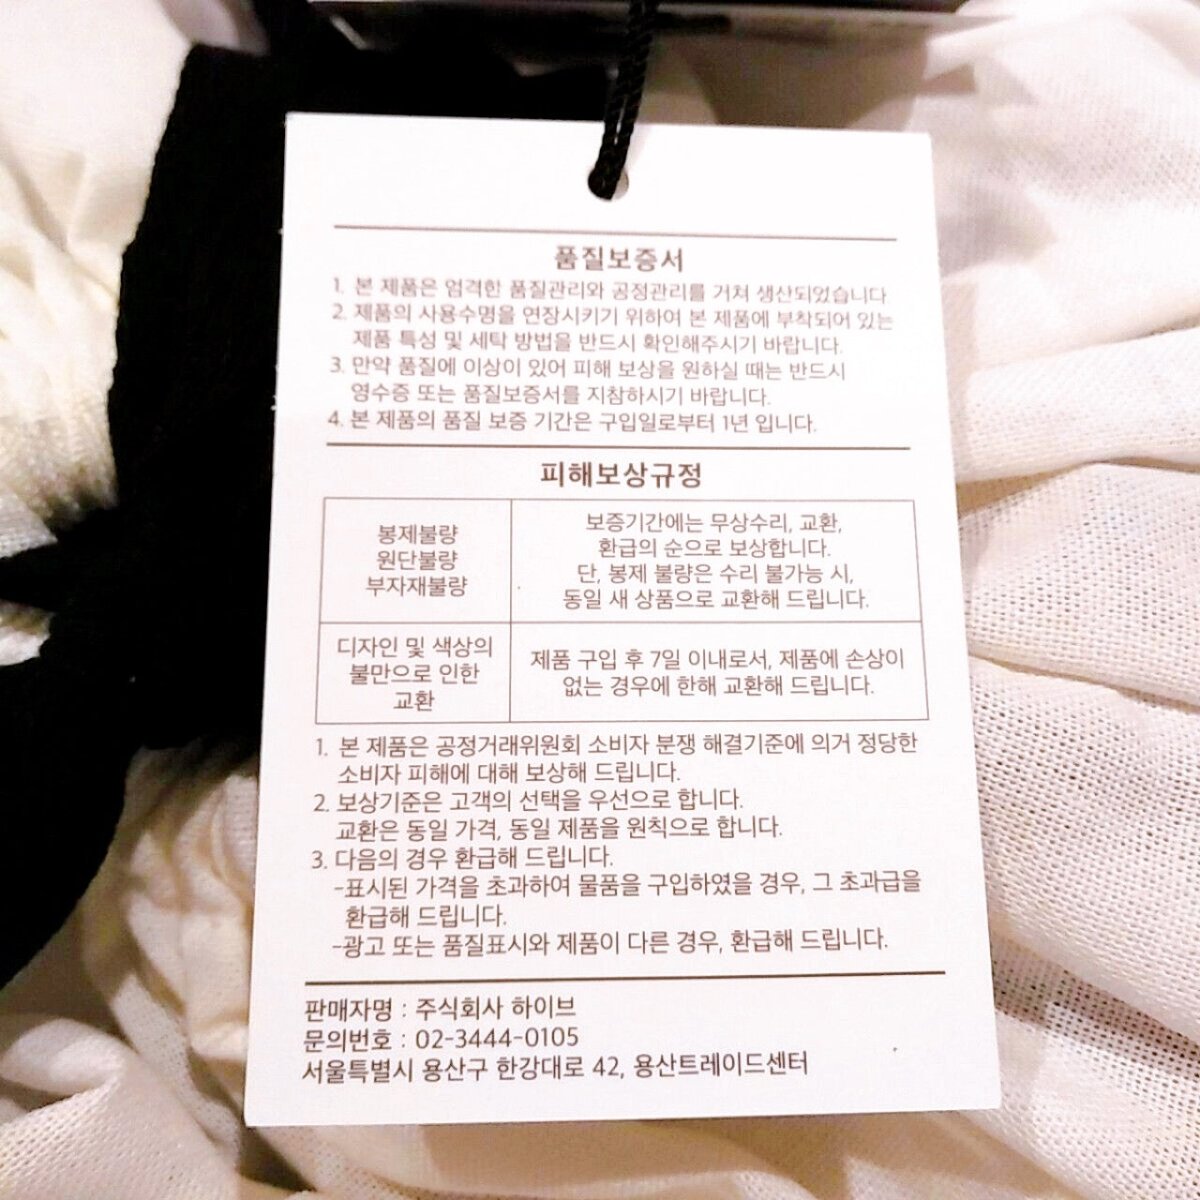 BTS Artist Made Collection V Taehyung Mute Boston Bag Genuine